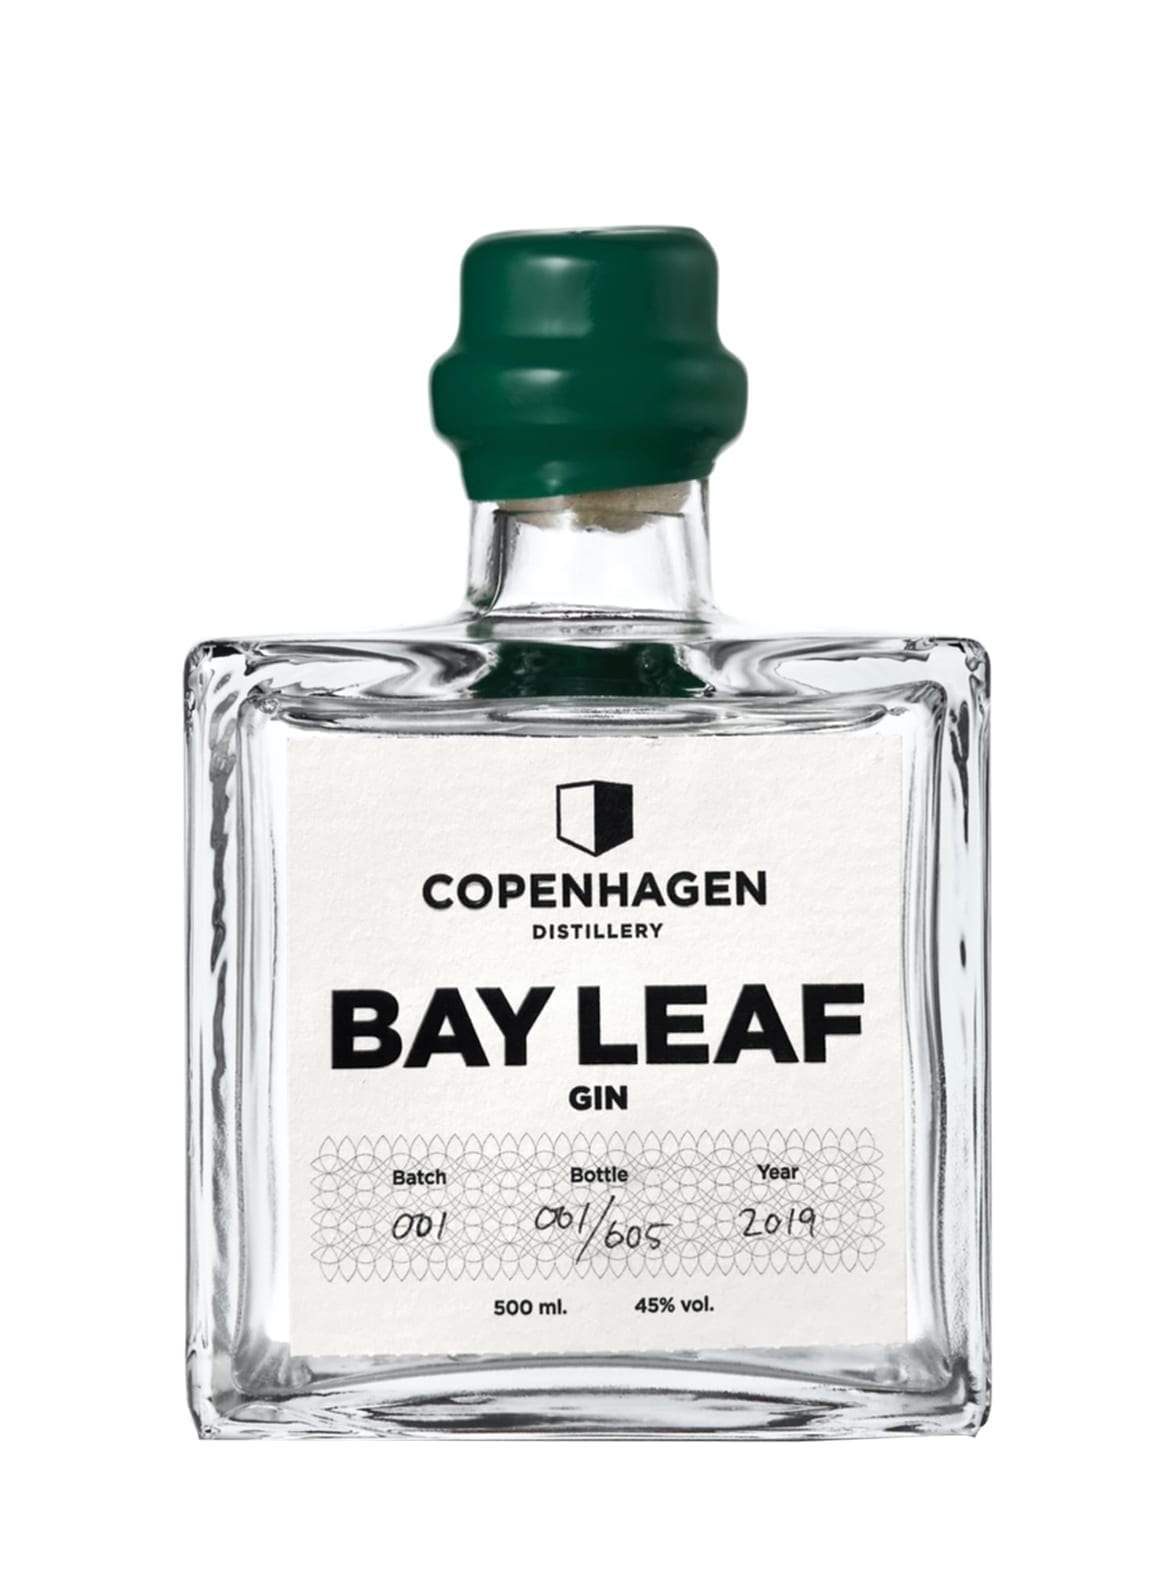 Copenhagen Distillery Bay Leaf Organic Gin 45% 500ml | Gin | Shop online at Spirits of France